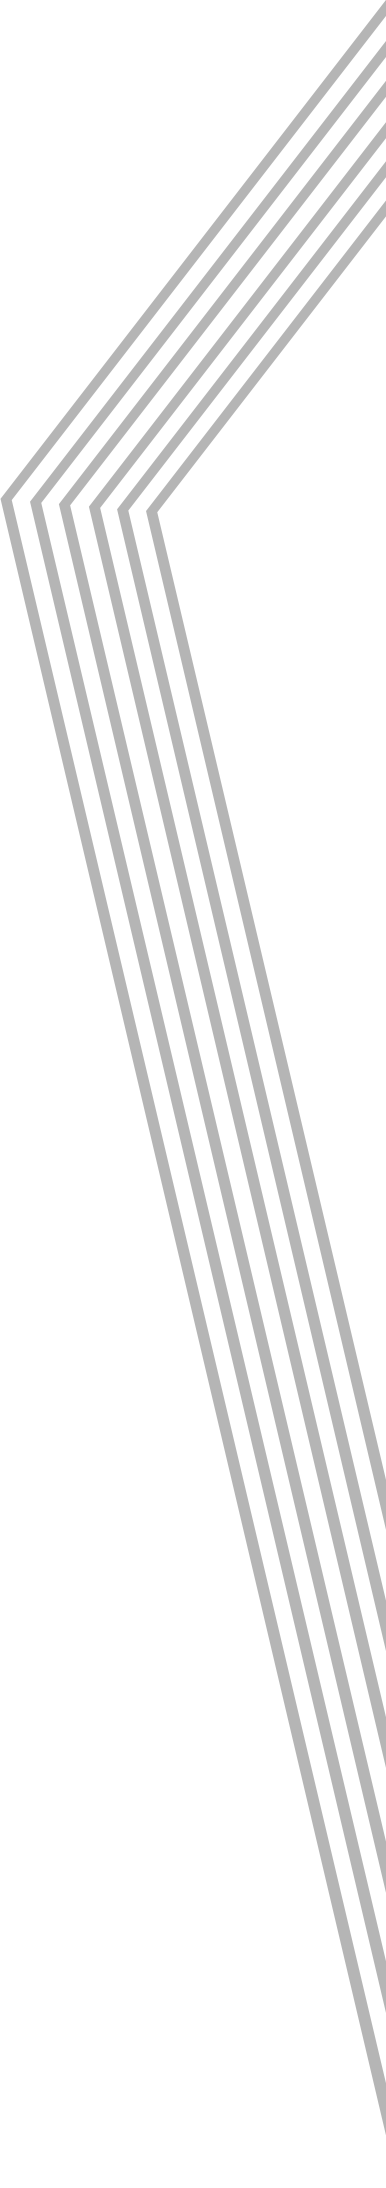 Architectes Associes stripes 5